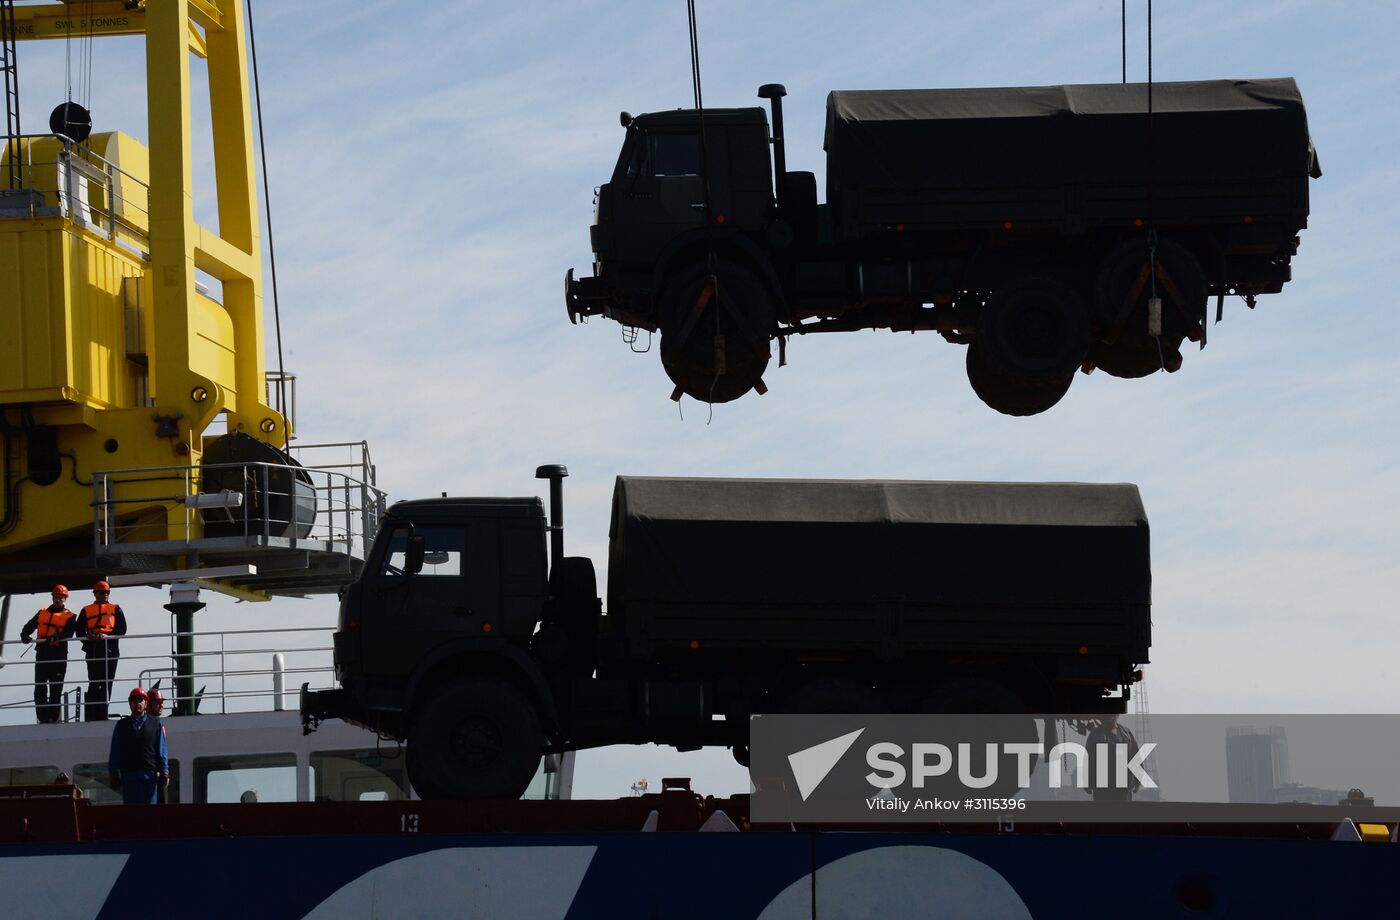 Loading military equipment aboard the vessel Captain Krems during an exercise in Vladivostok